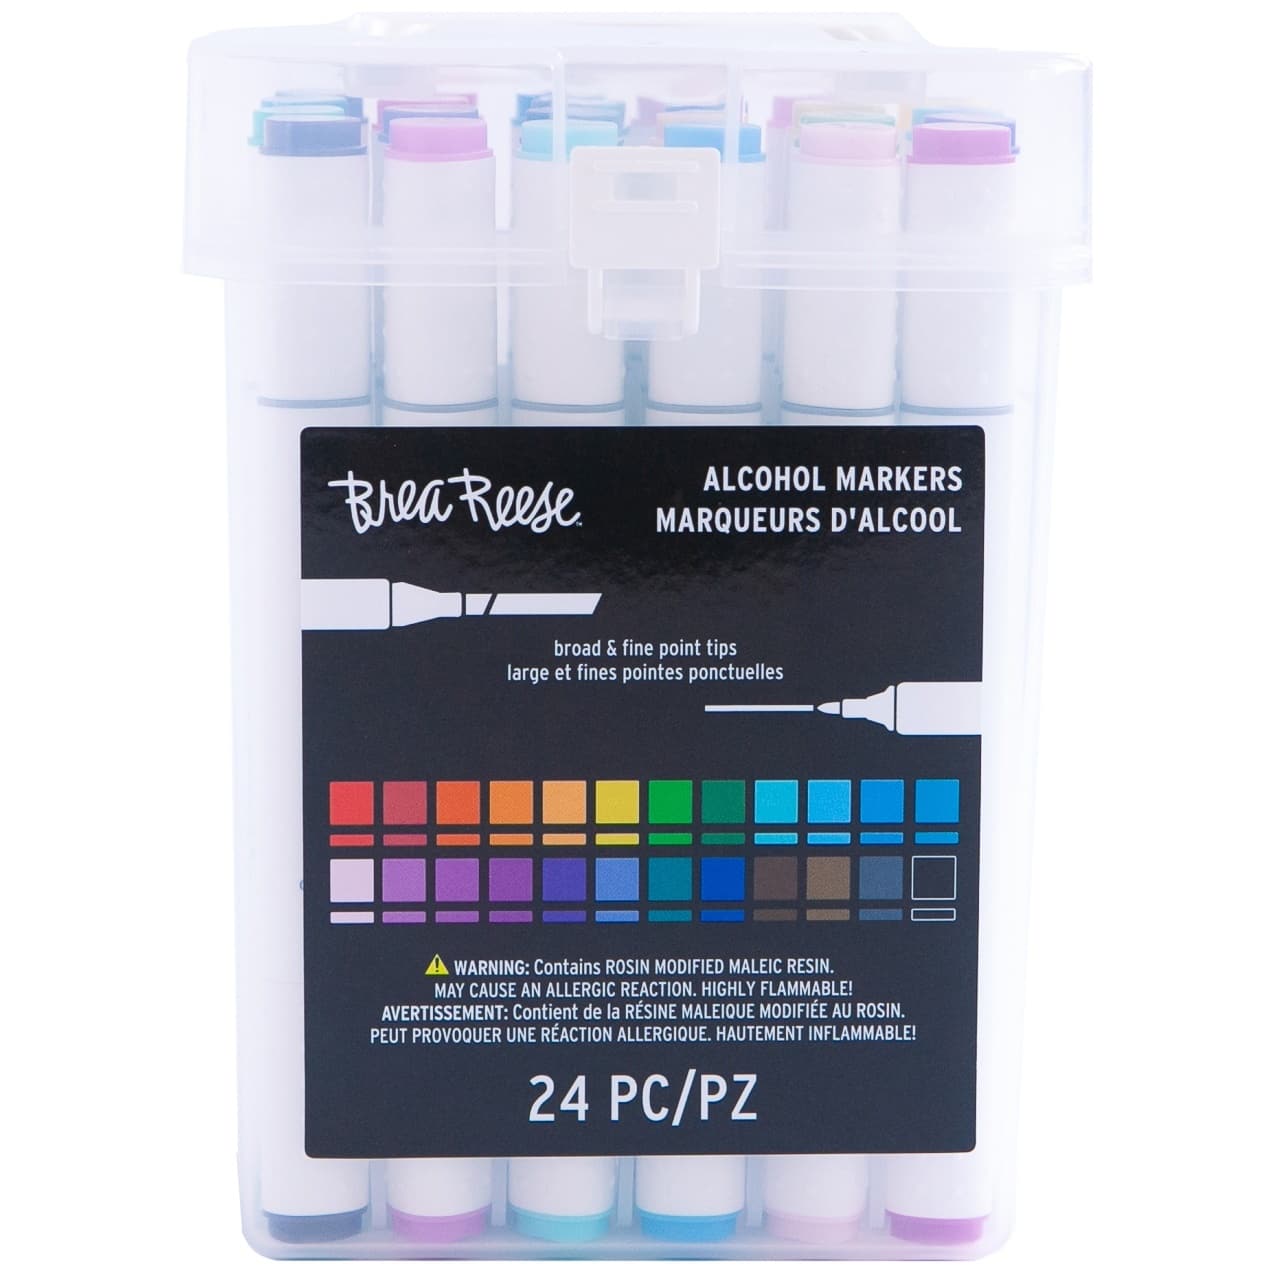 Dual Tip Marker Set (24-Colors)